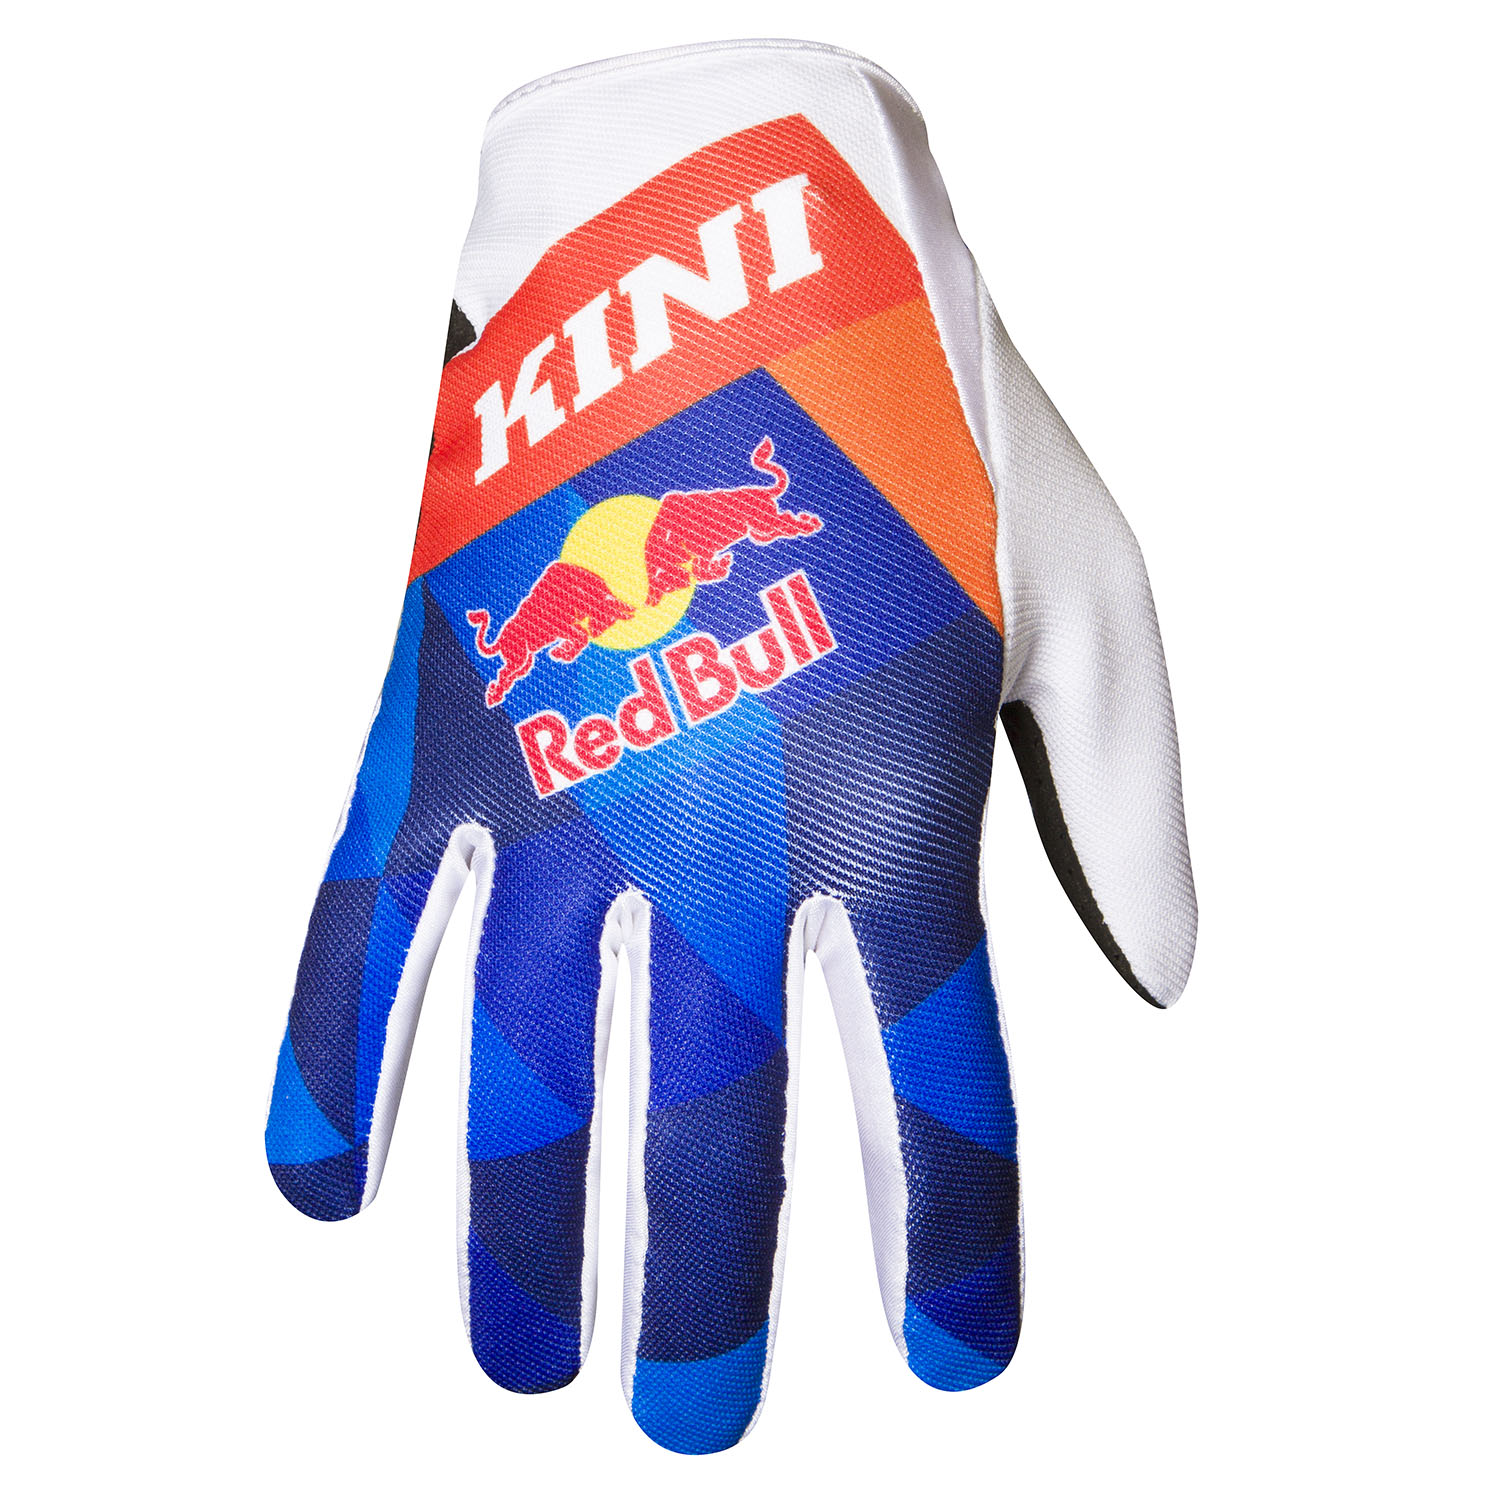 Kini Red Bull Handschuhe Vintage Orange/Blau